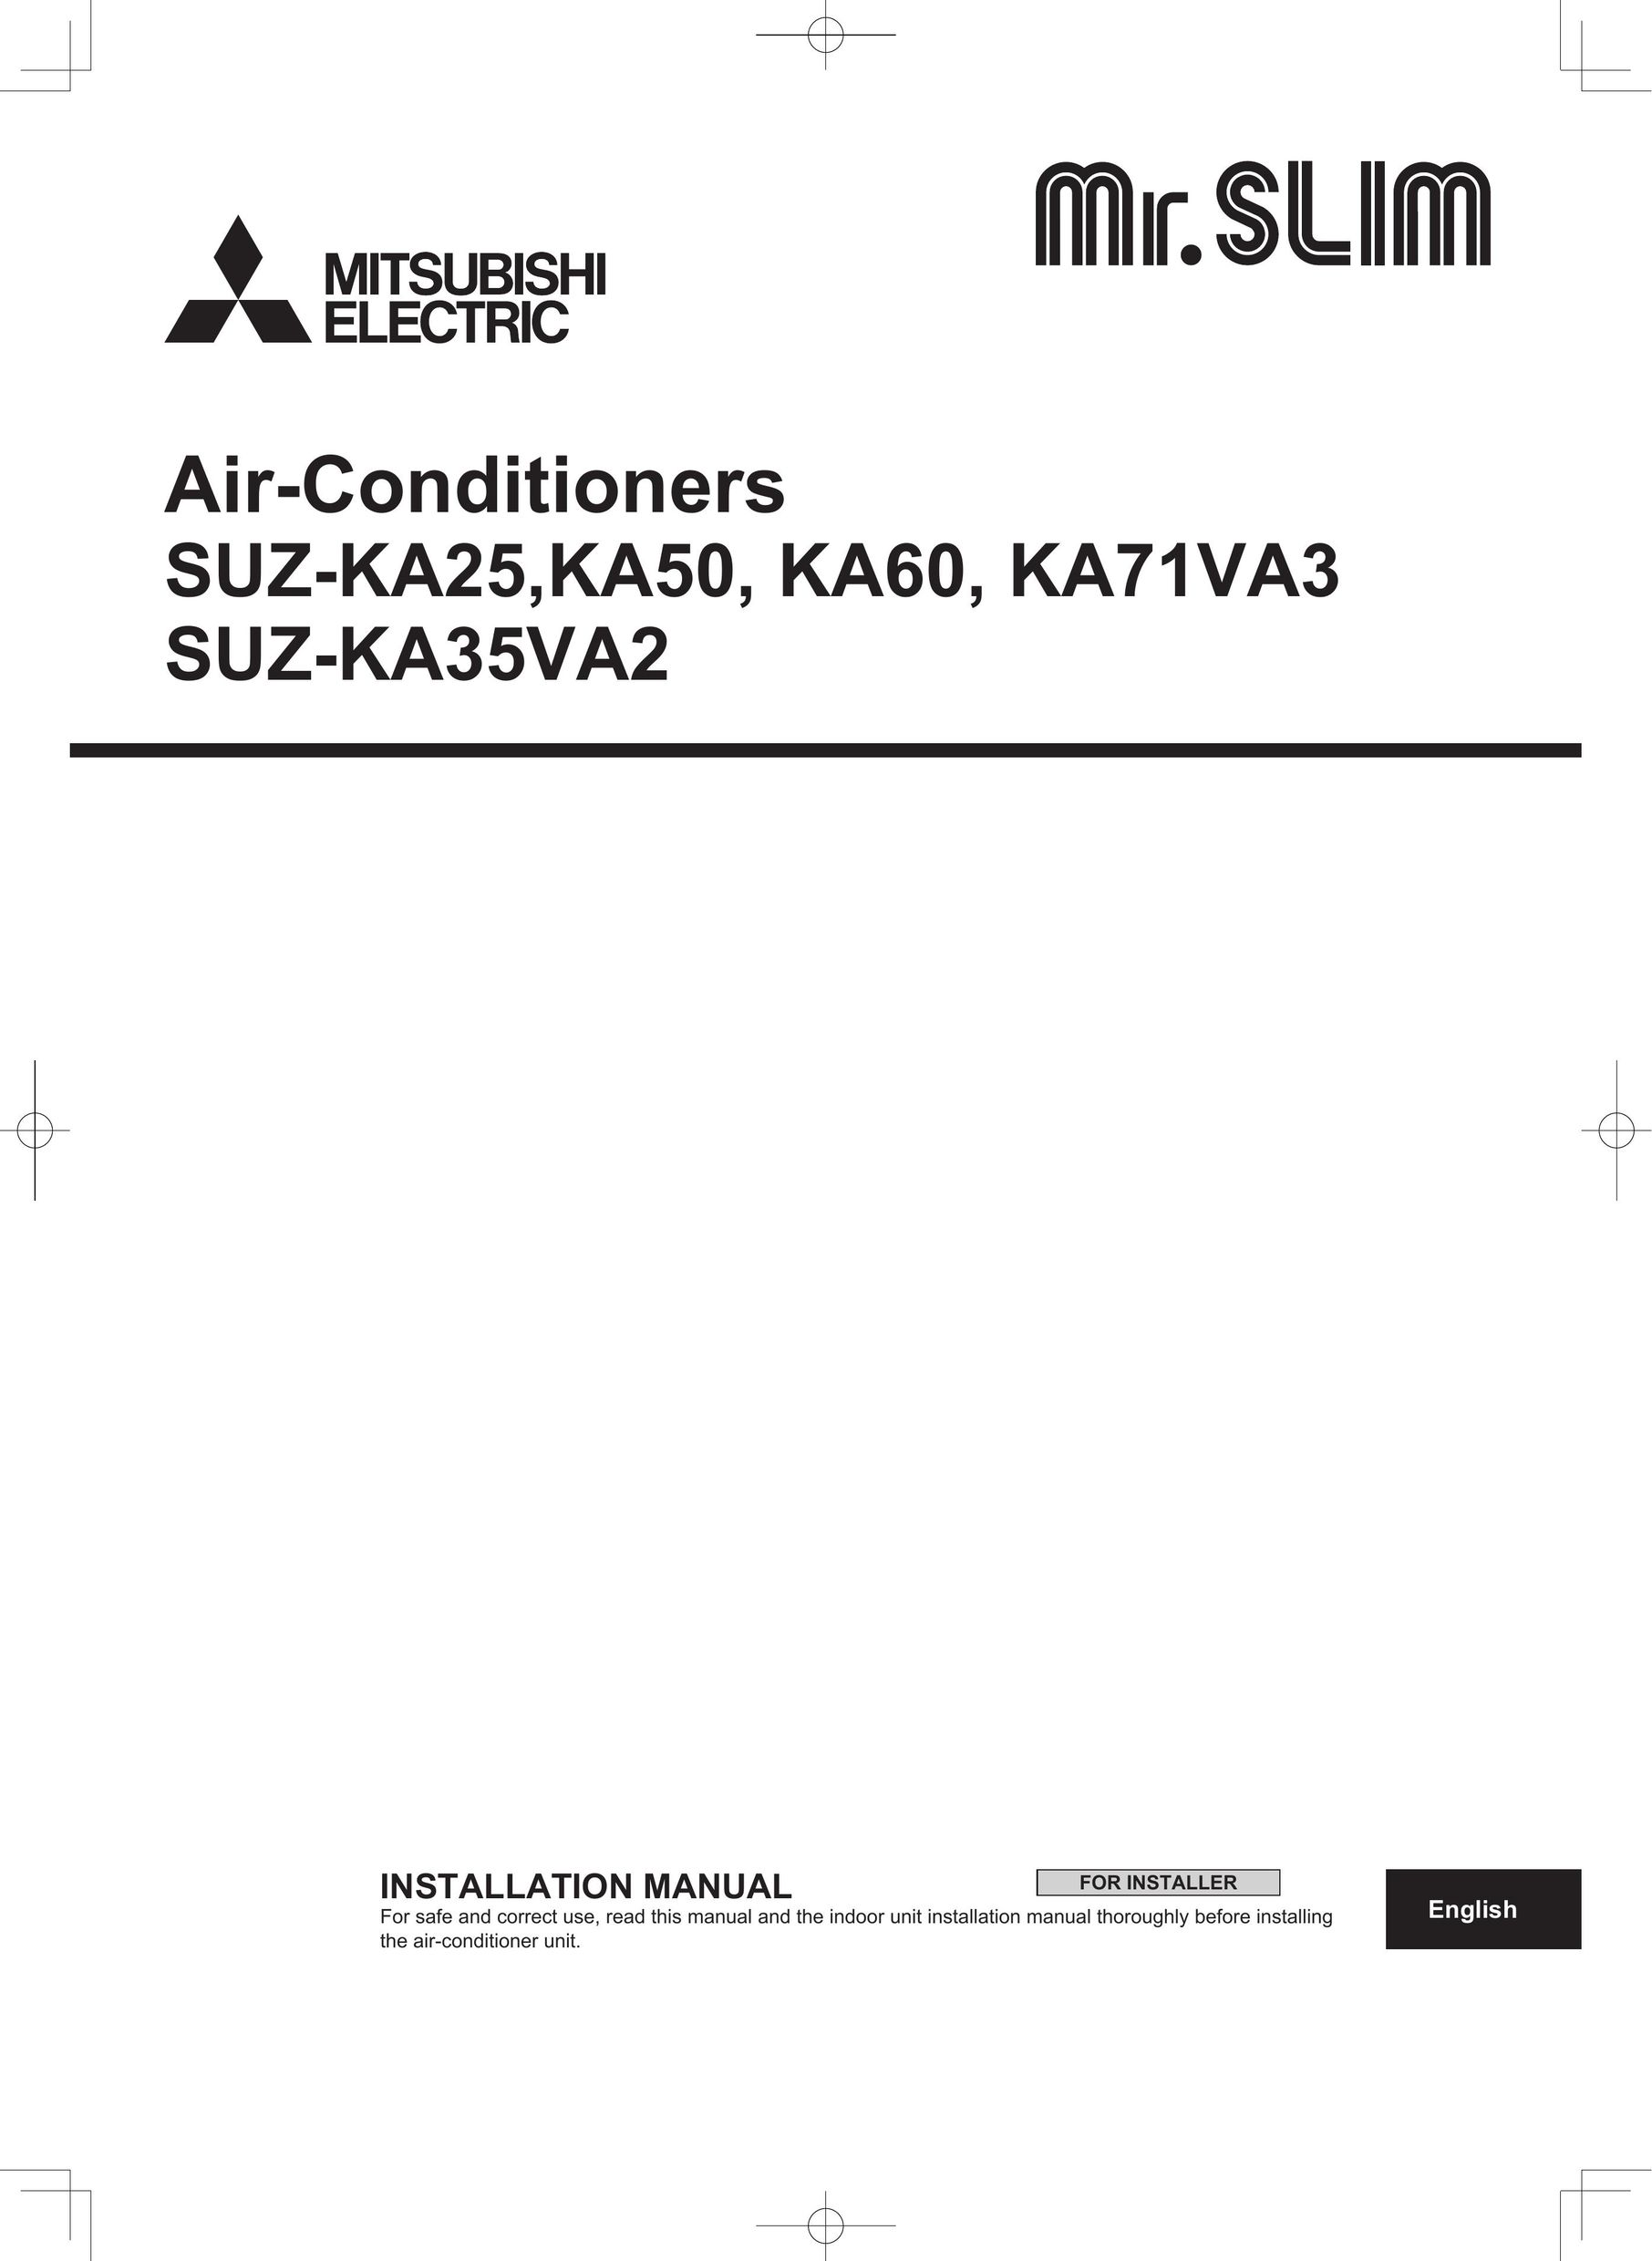 Mitsumi electronic KA60 Air Conditioner User Manual